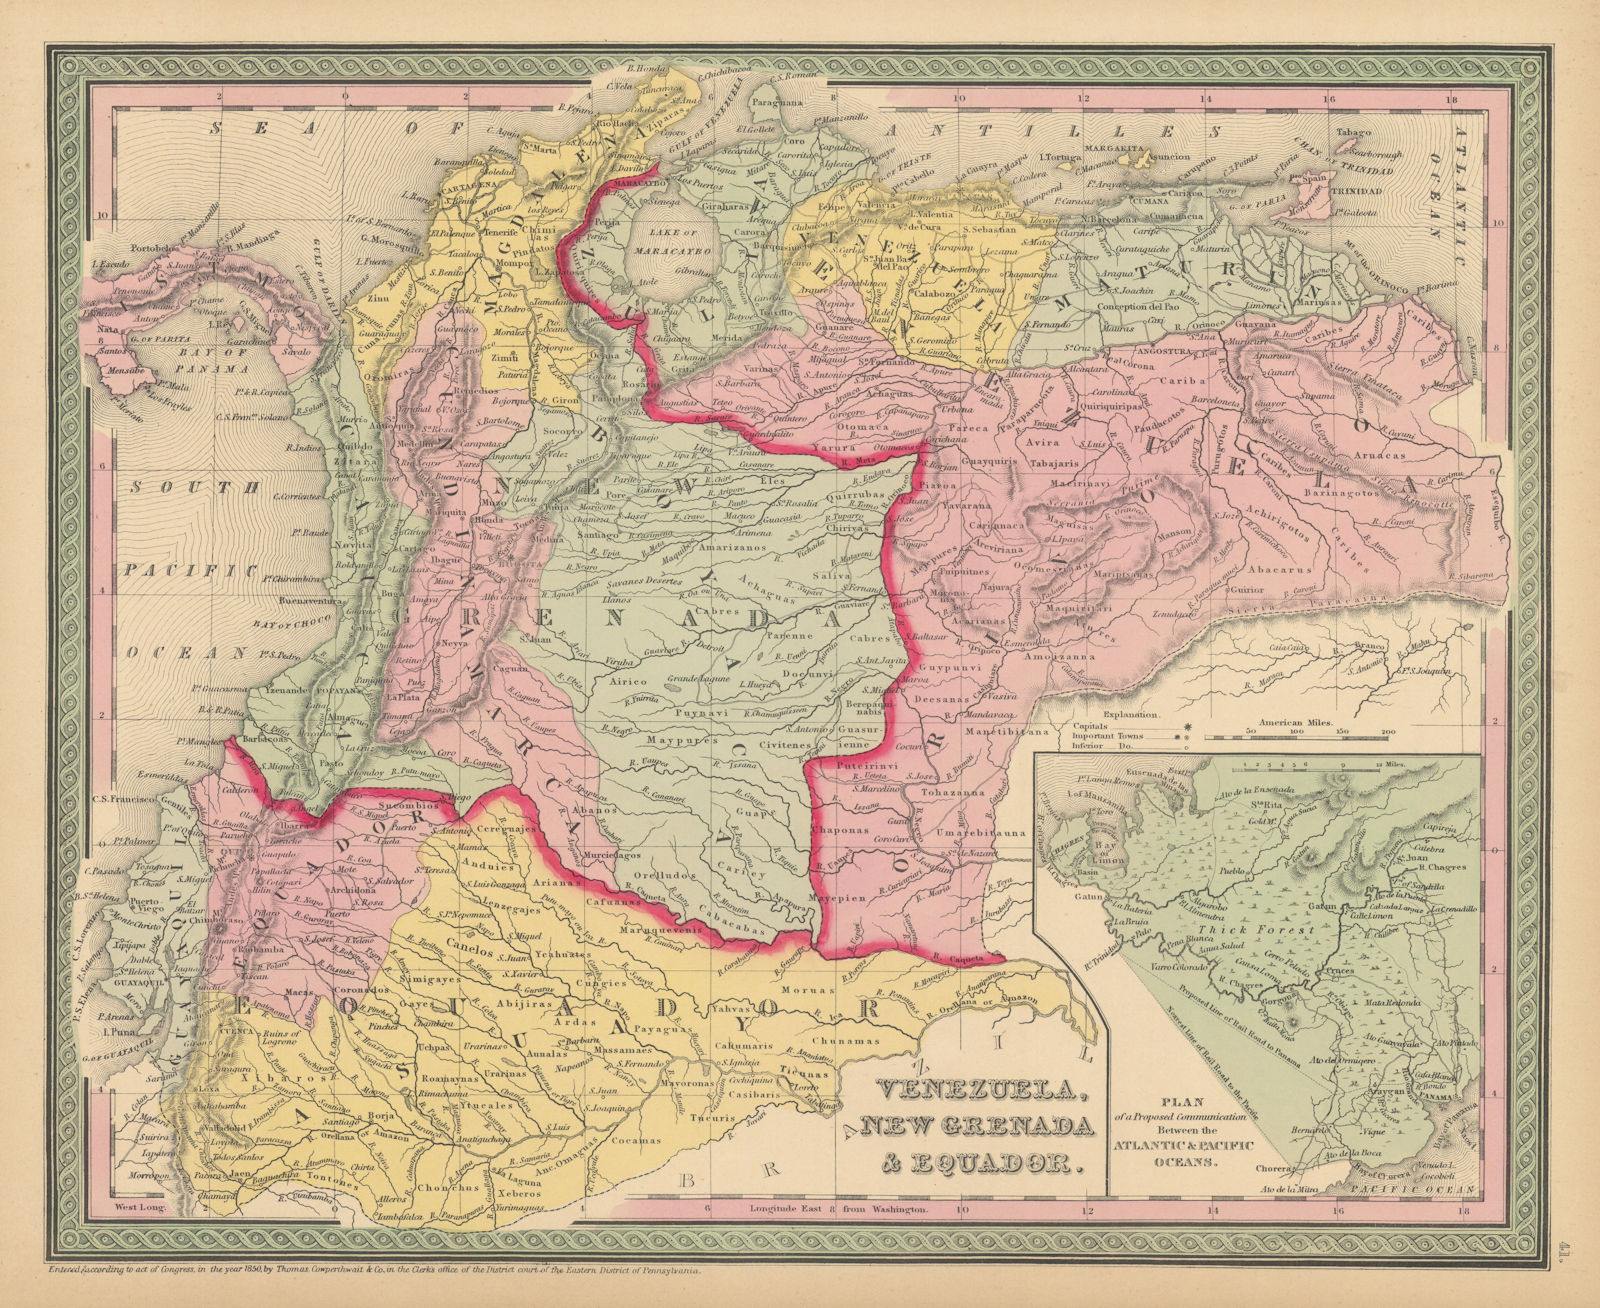 Venezuela, New Grenada & Equador. Panama canal proposal. COWPERTHWAIT 1852 map